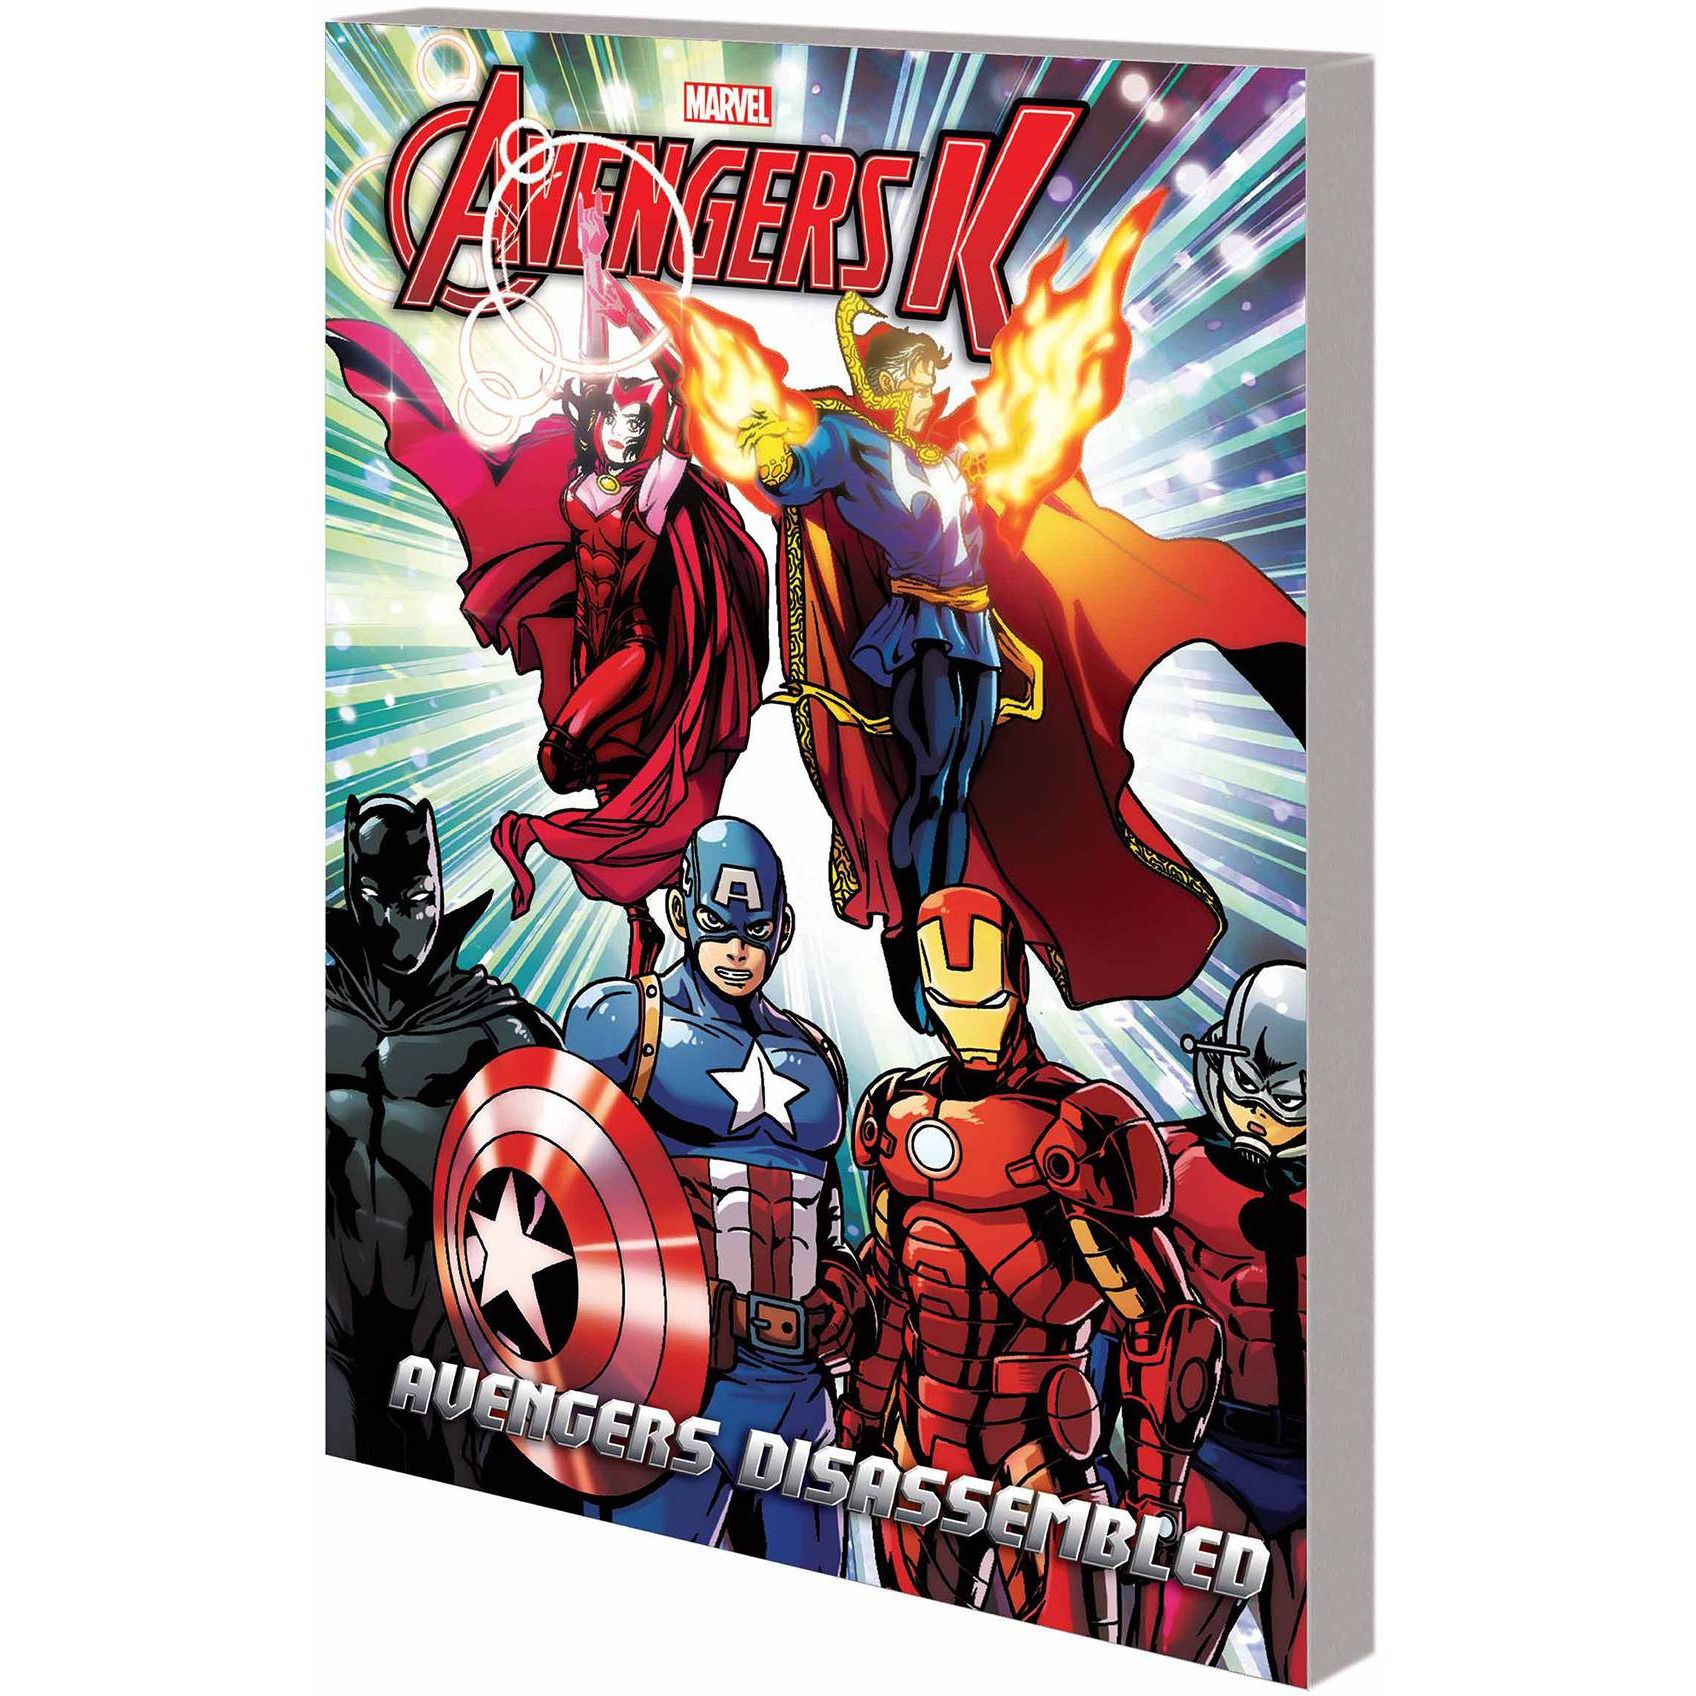  Avengers K Avengers Disassembled Vol. 3 TP Uncanny!